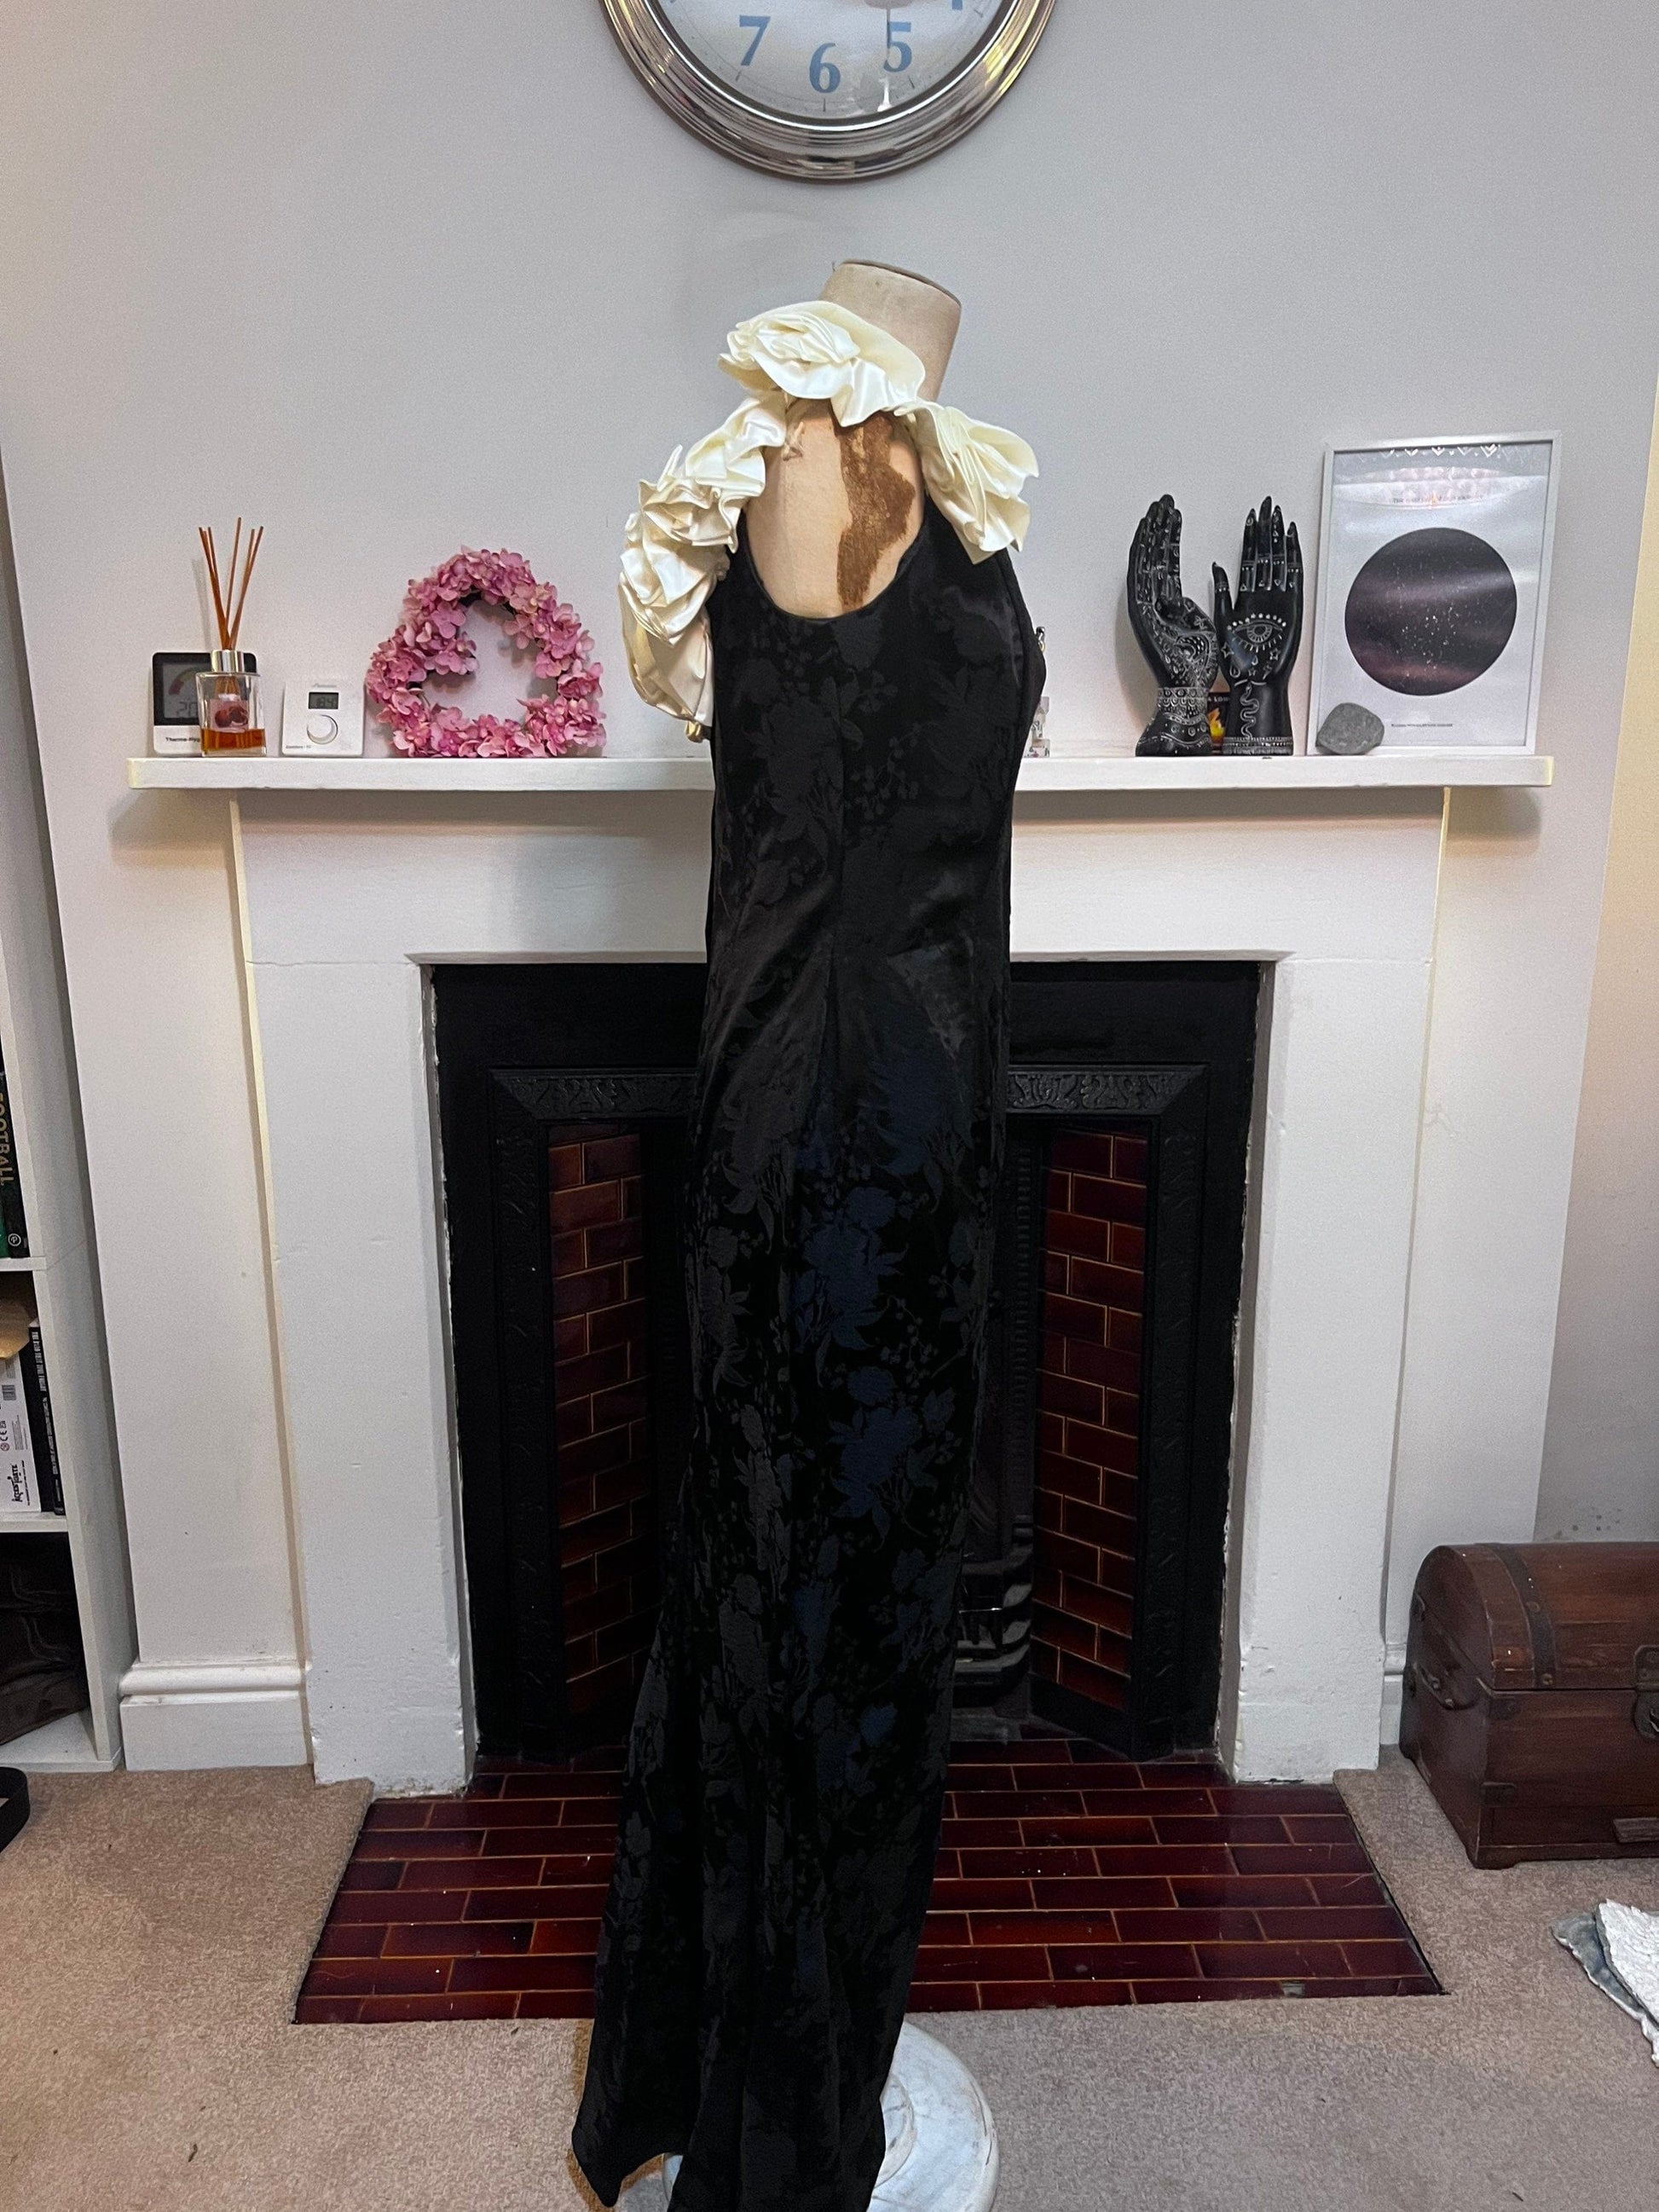 Vintage dress Black & Cream Scott McClintock 80s Prom Dress - Jessica McClintock for Gunne Sax